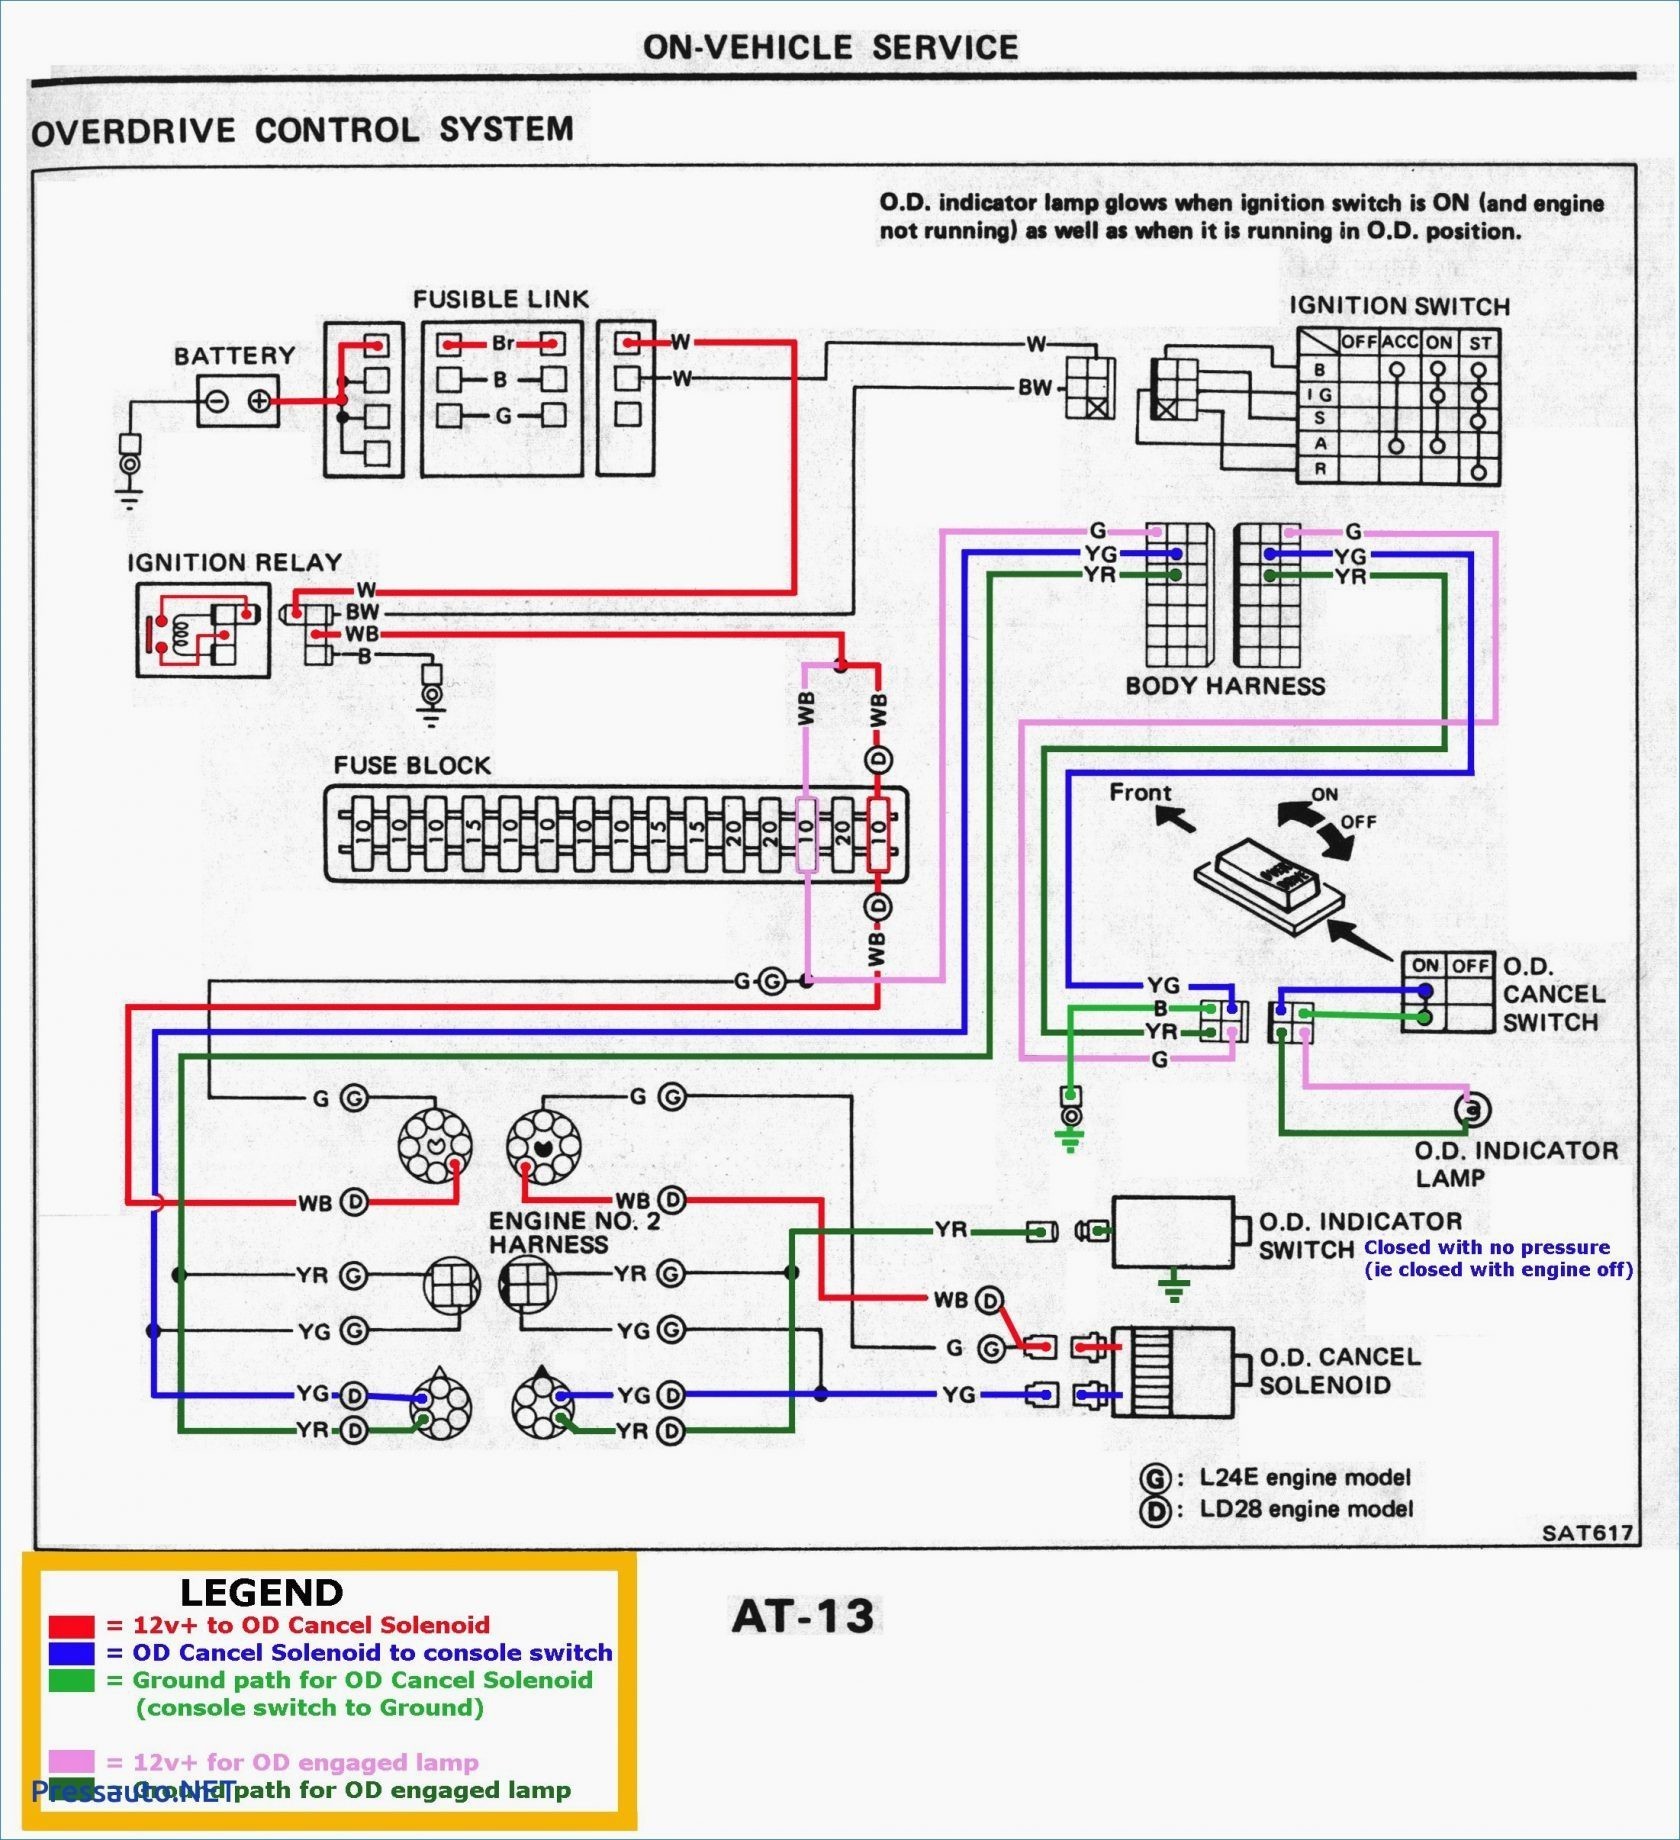 Car Wiring Diagram Symbols Honda Wiring Diagrams Automotive Of Car Wiring Diagram Symbols